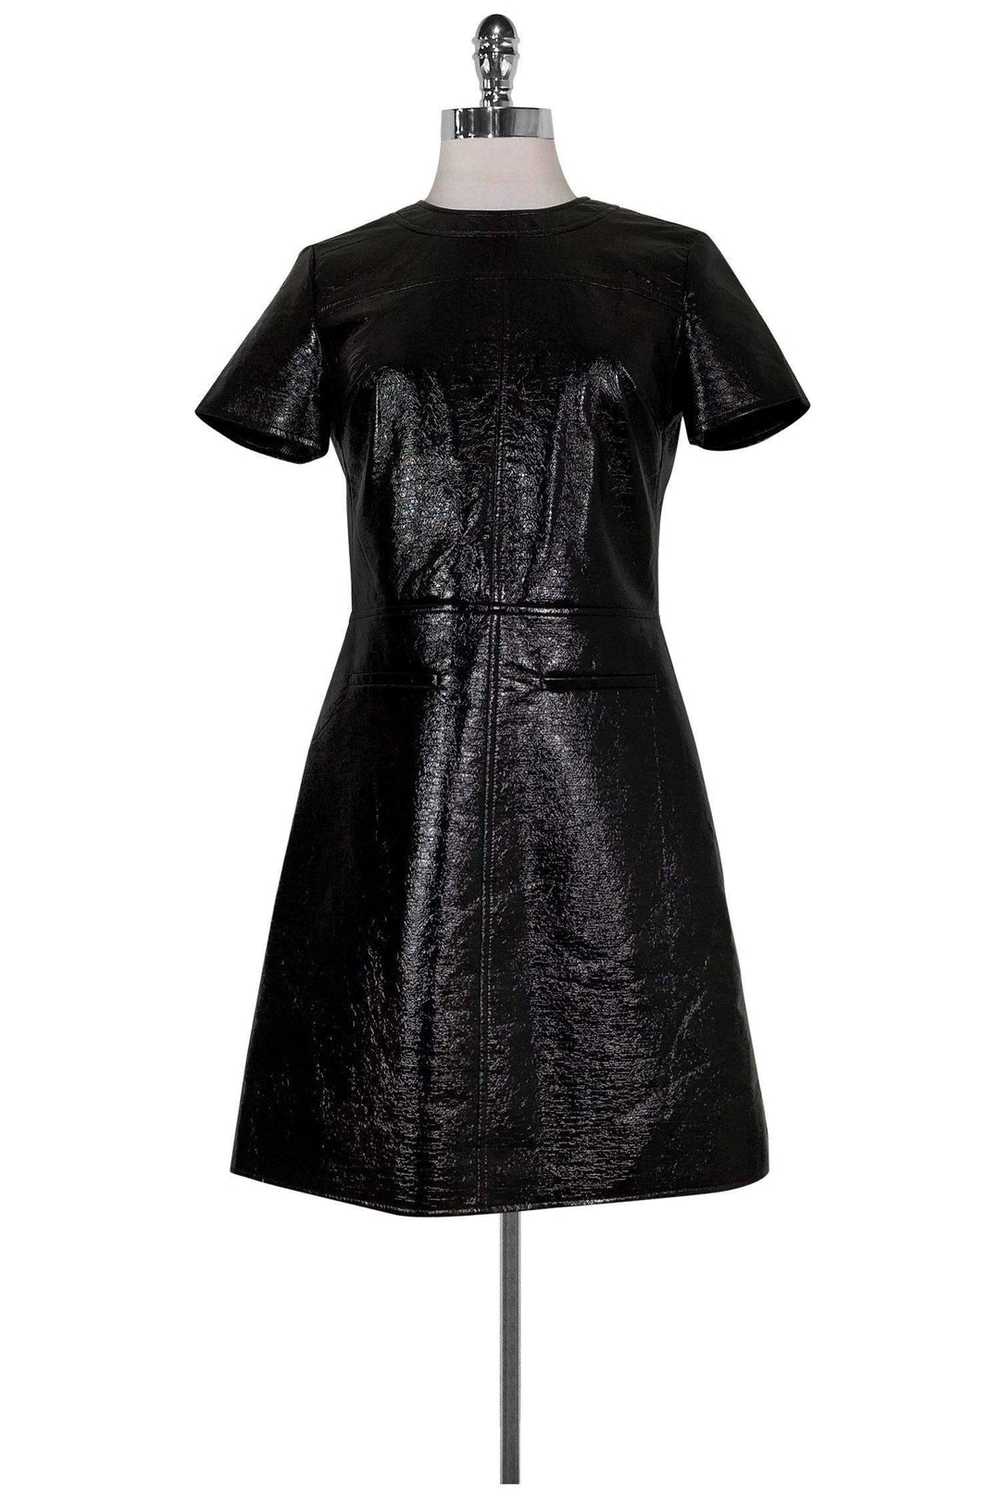 Michael Kors - Black Vinyl Sheath Dress Sz 2 - image 1